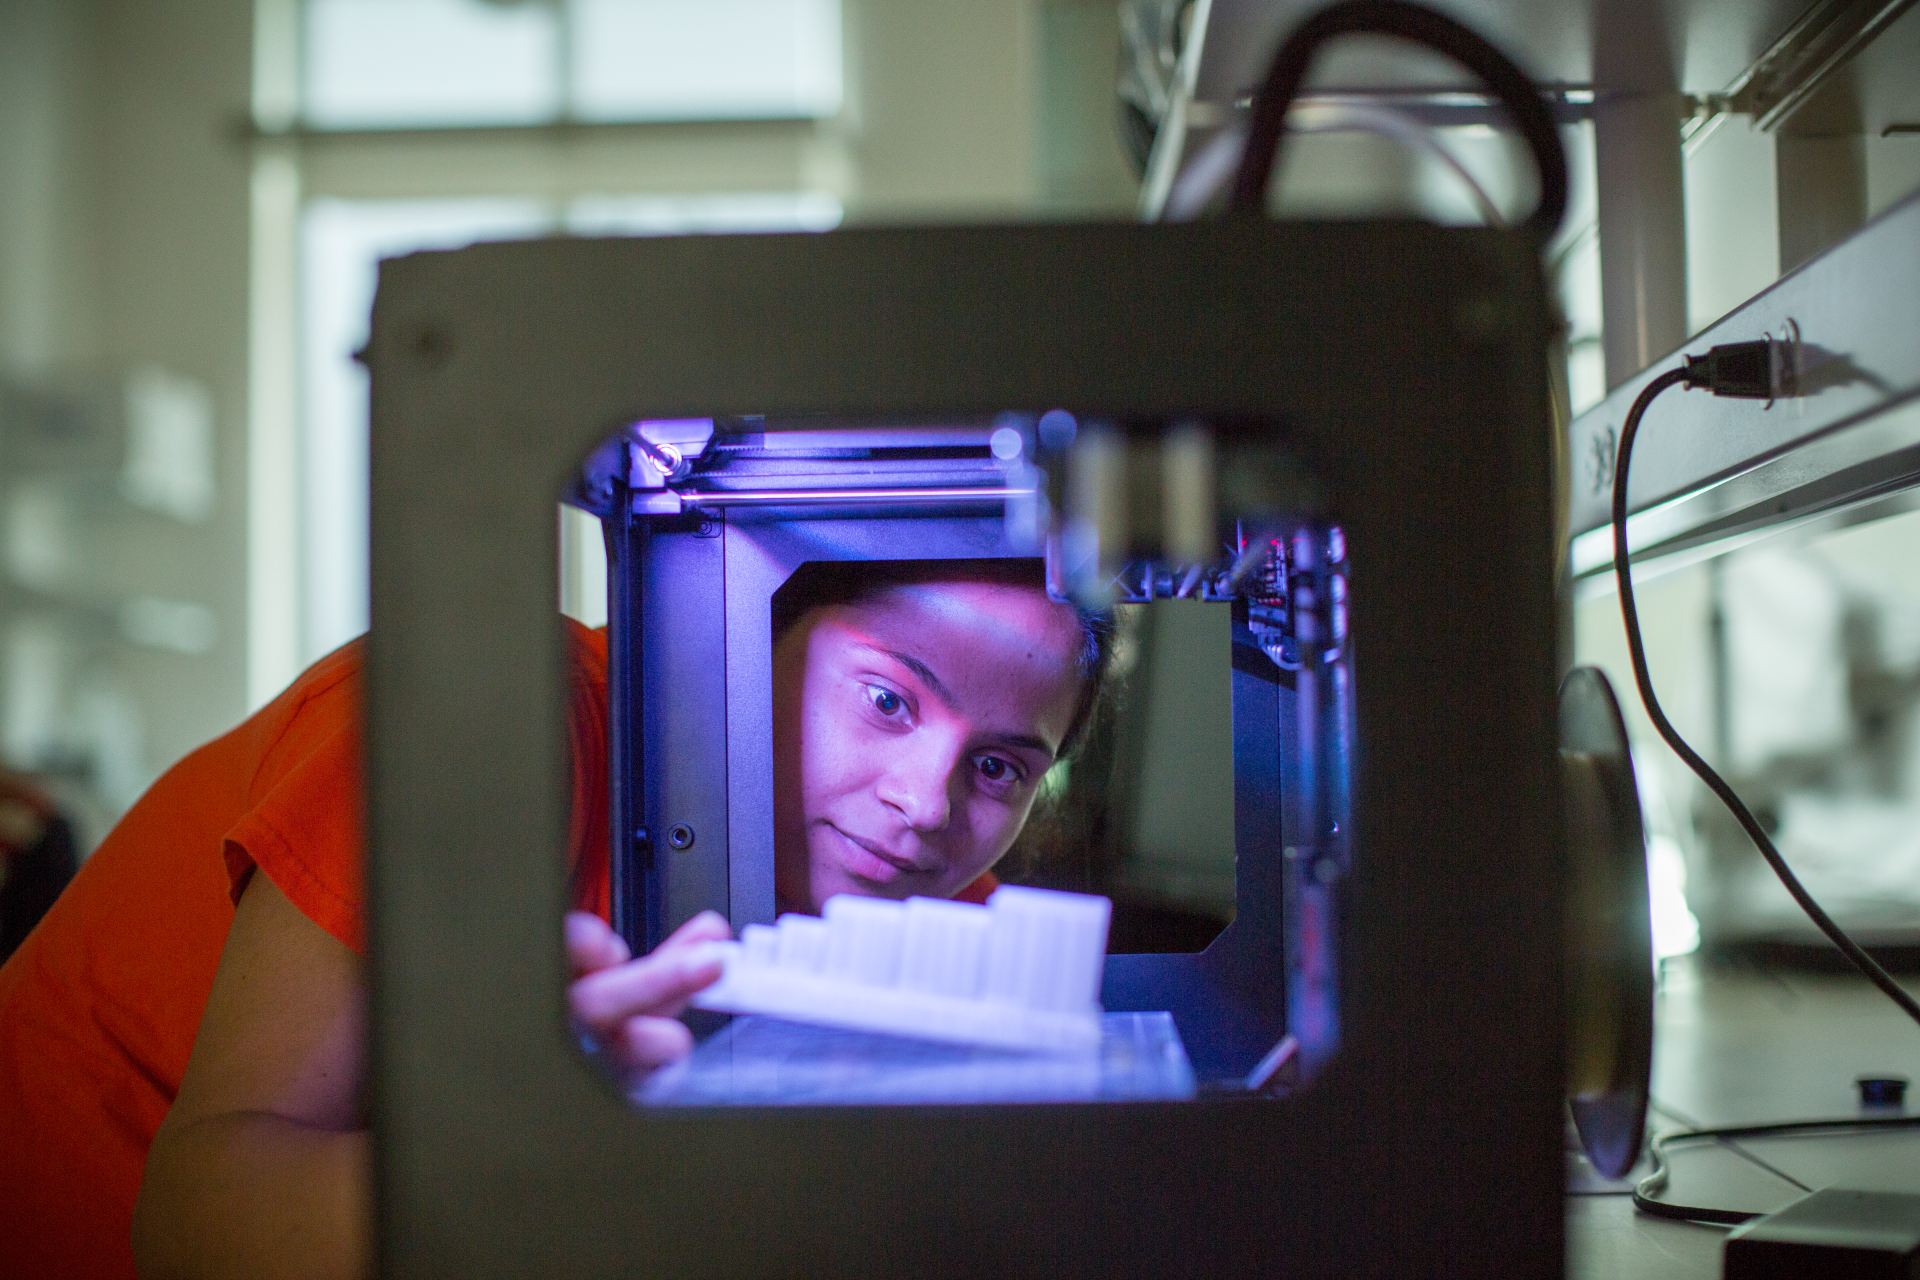 Student observing material inside a 3D printer